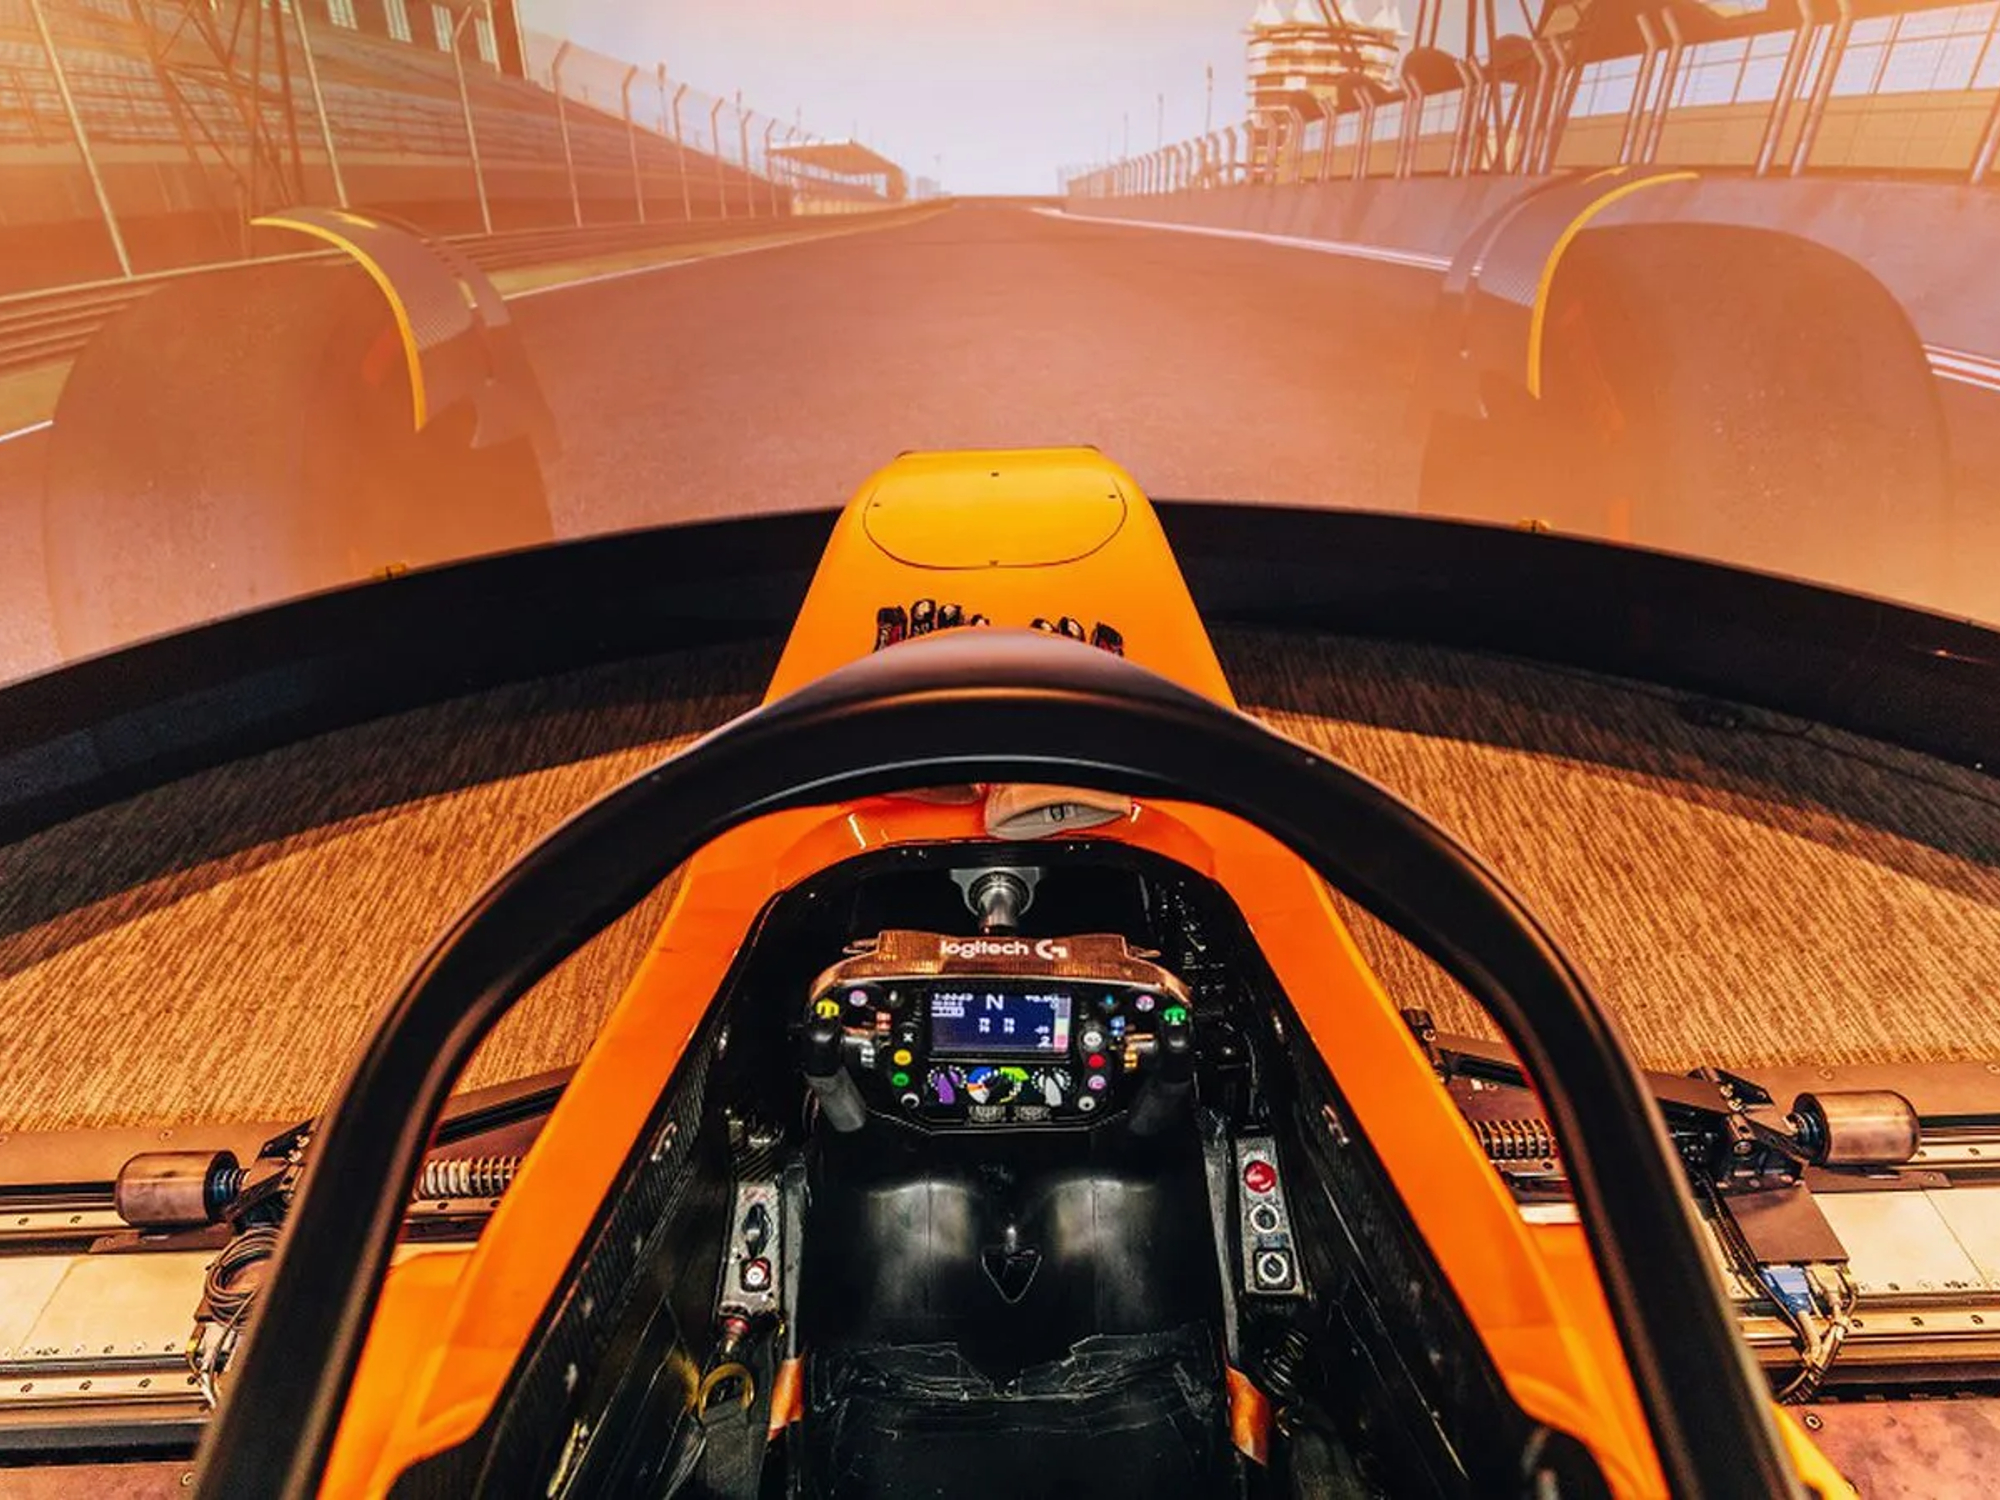  F1 Racing Simulator cockpit